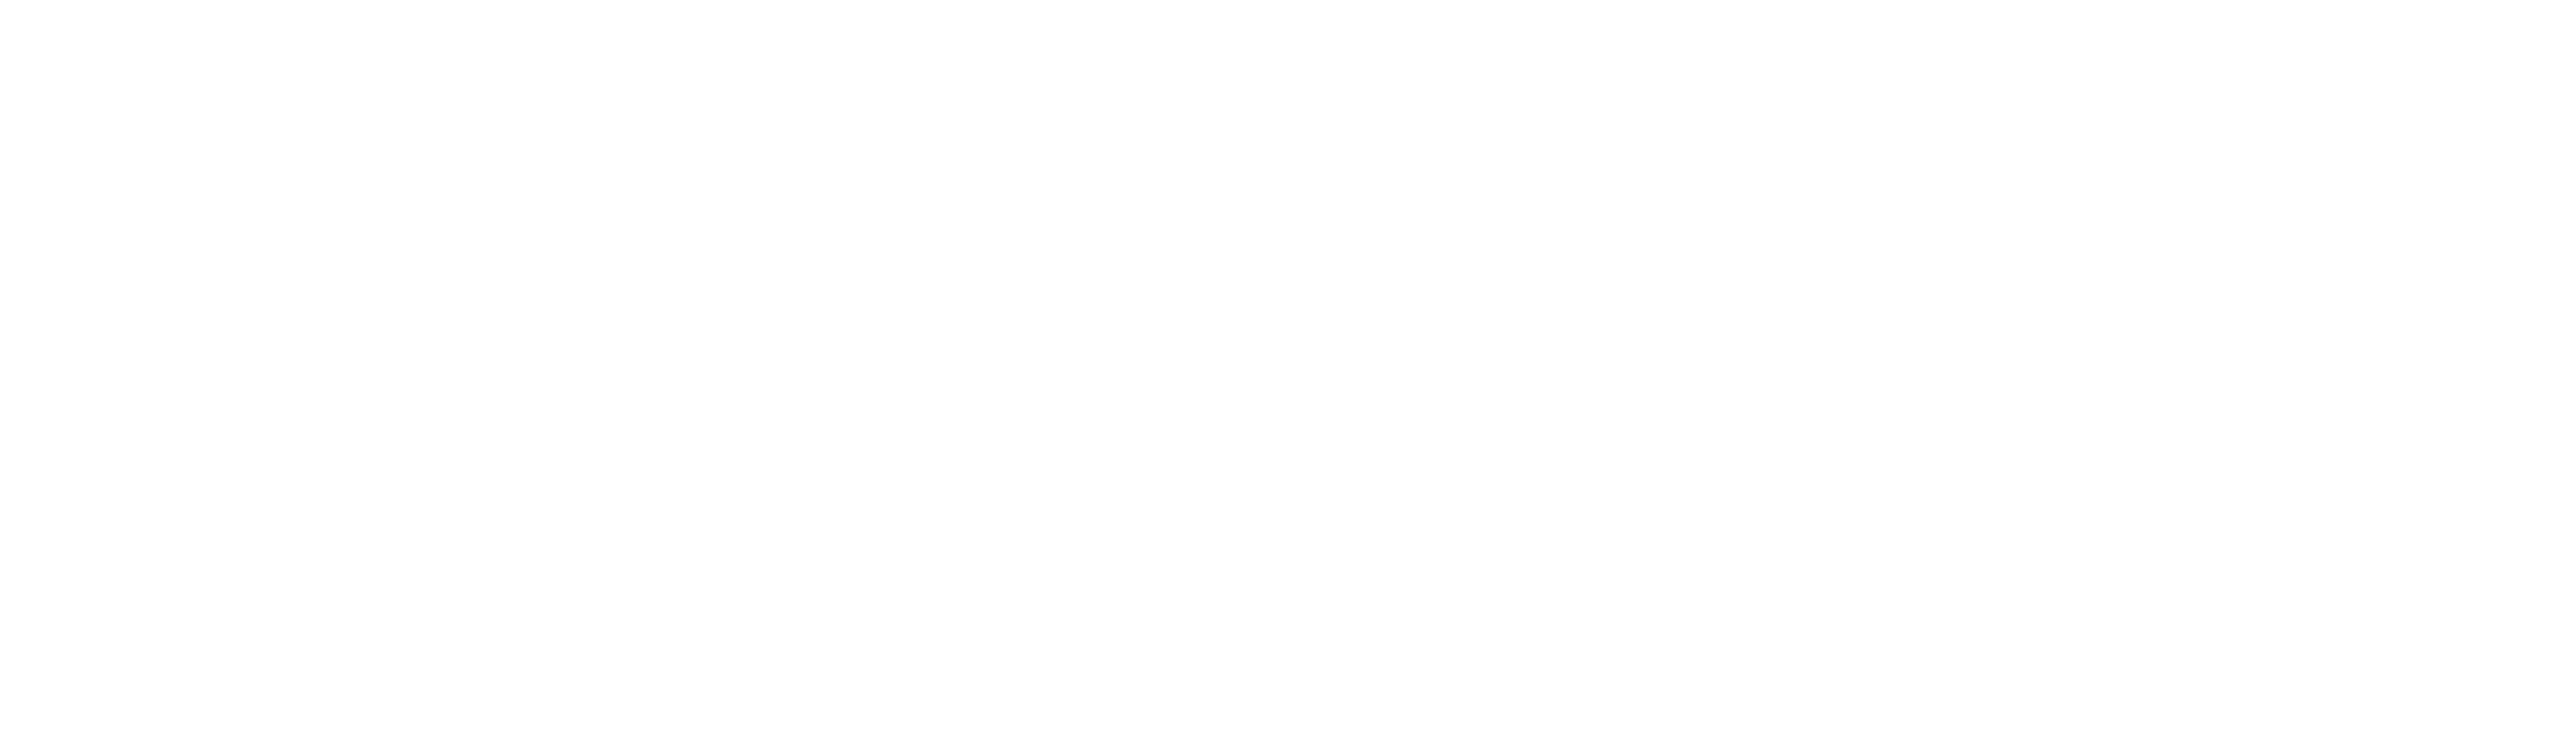 Teambakery